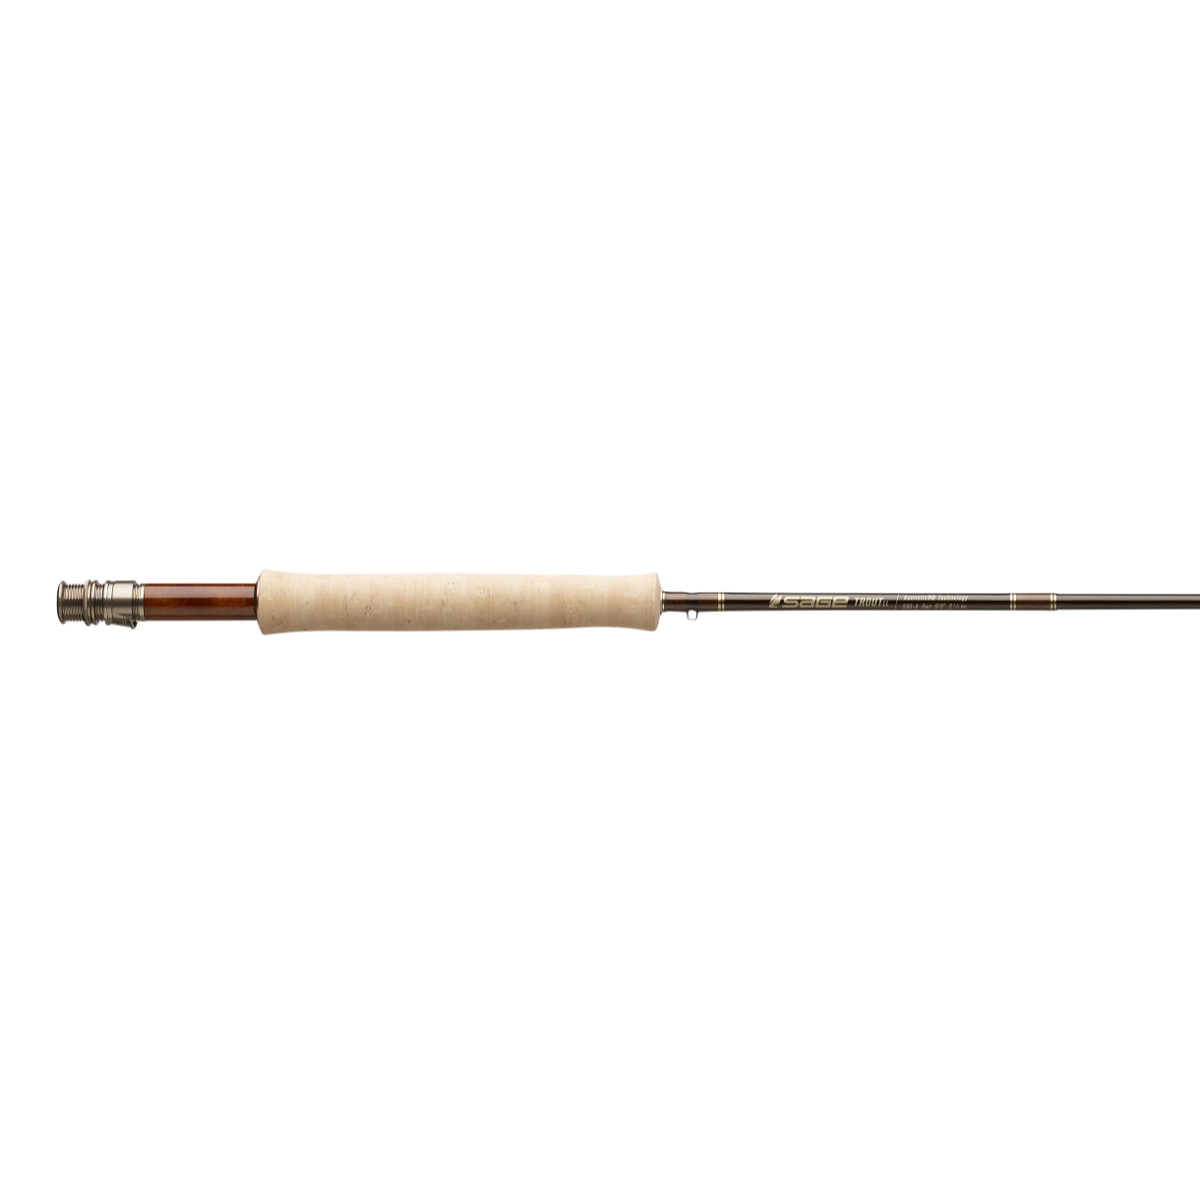 Fishpond Arrowhead Retractor – Guide Flyfishing, Fly Fishing Rods, Reels, Sage, Redington, RIO